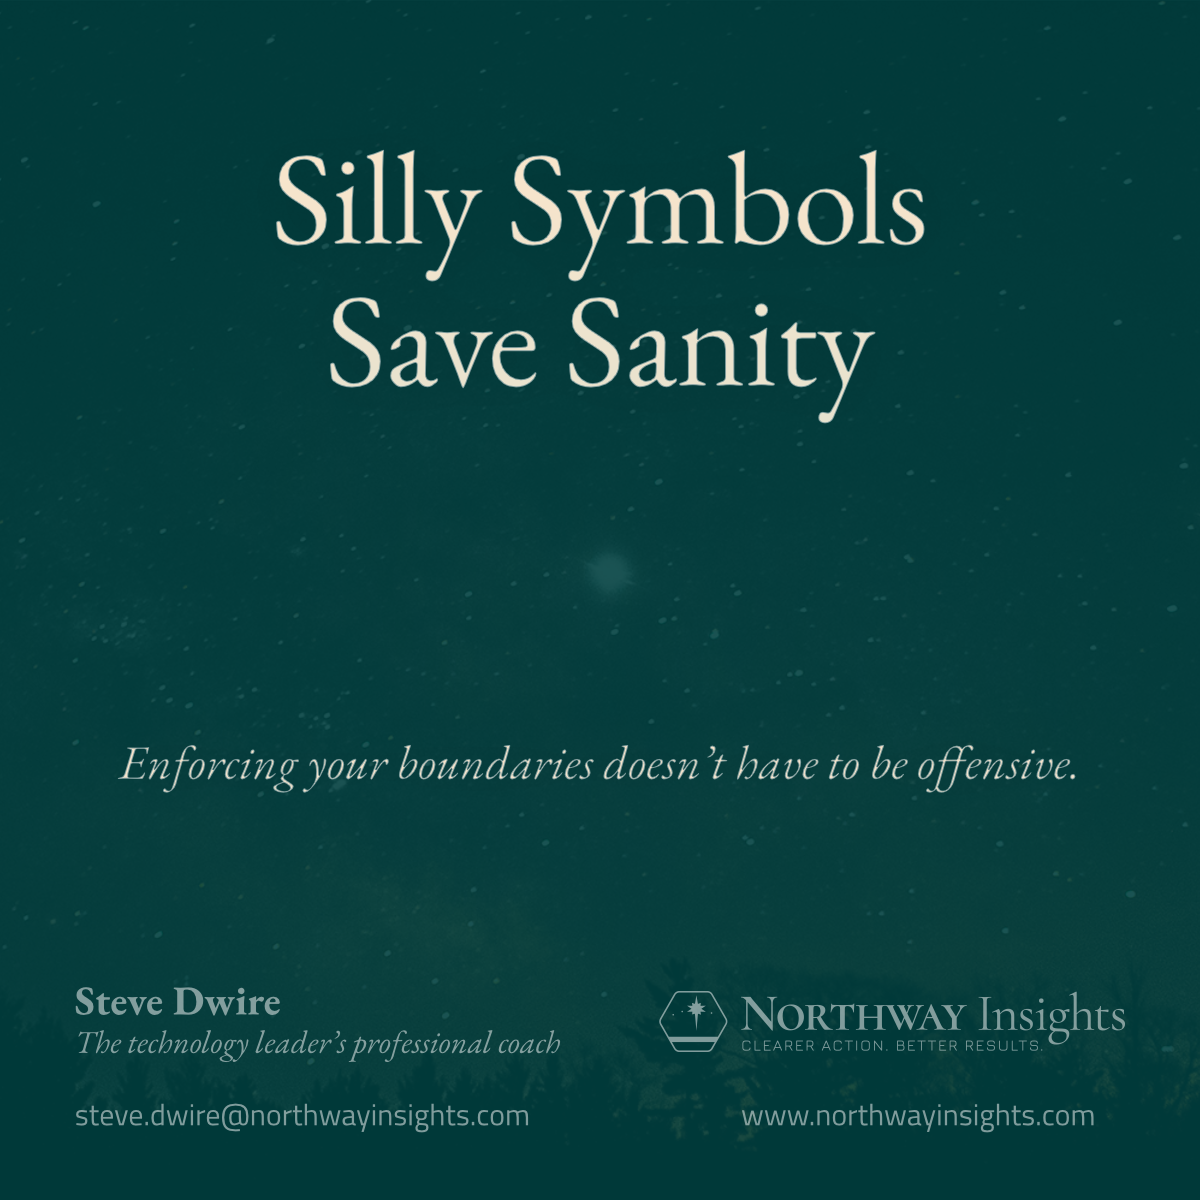 Silly Symbols Save Sanity